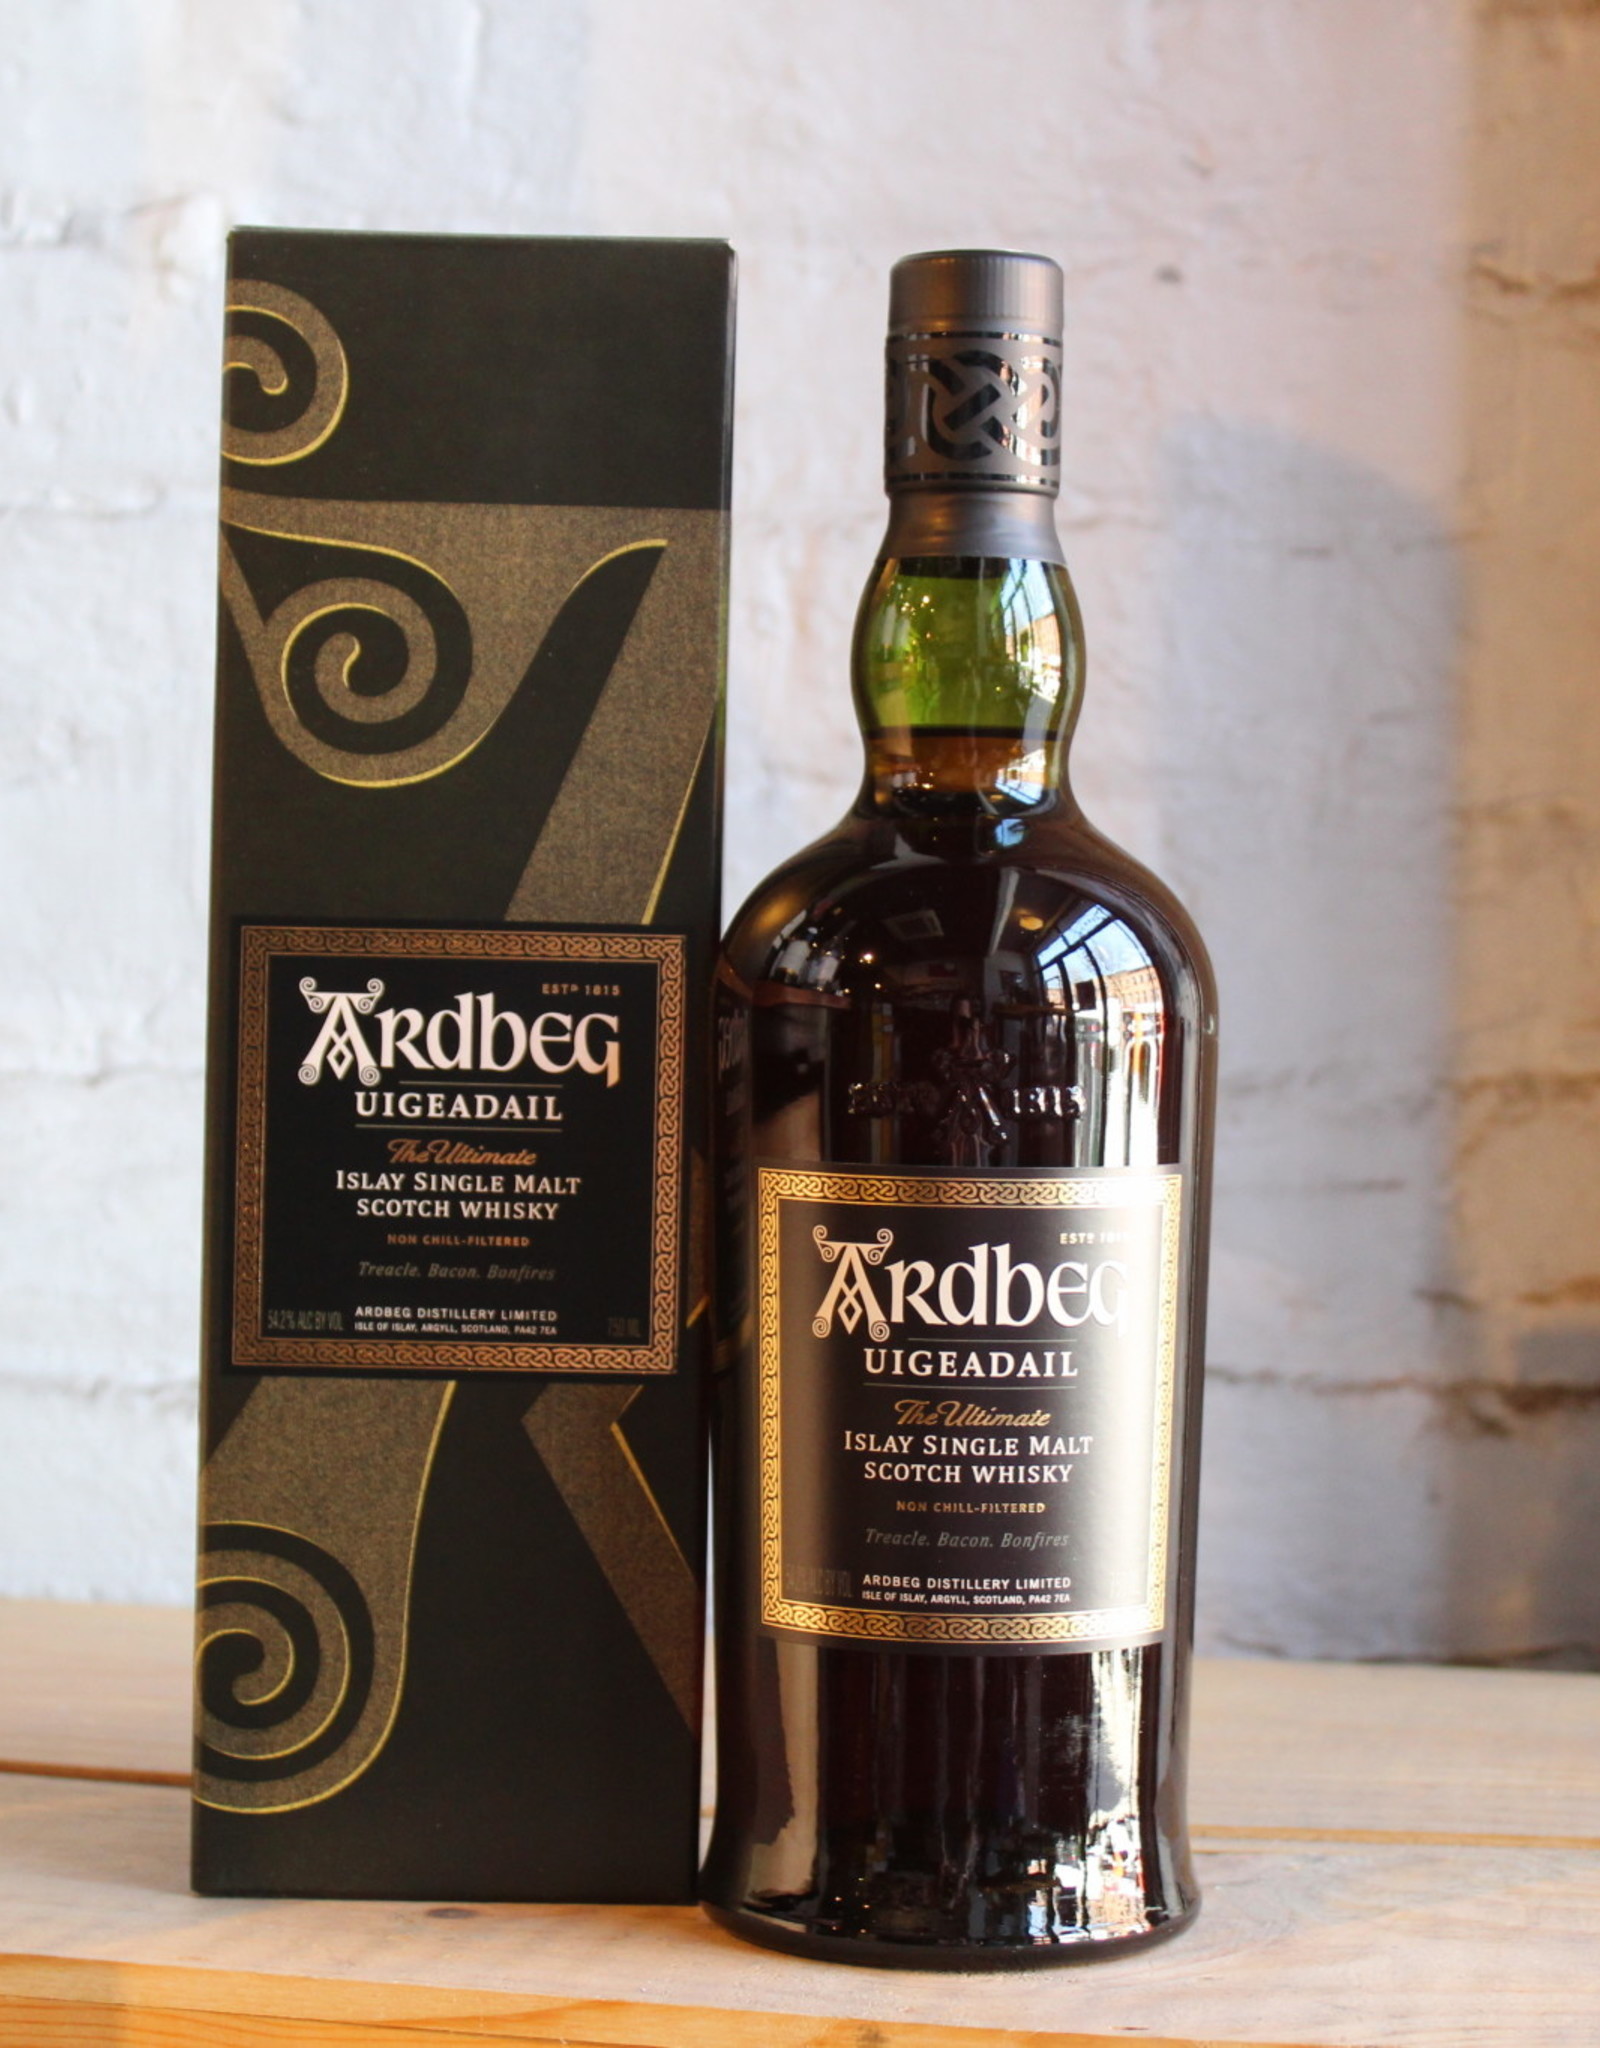 Ardbeg Uigeadail Single Malt Scotch Whisky - Islay, Scotland (750ml)